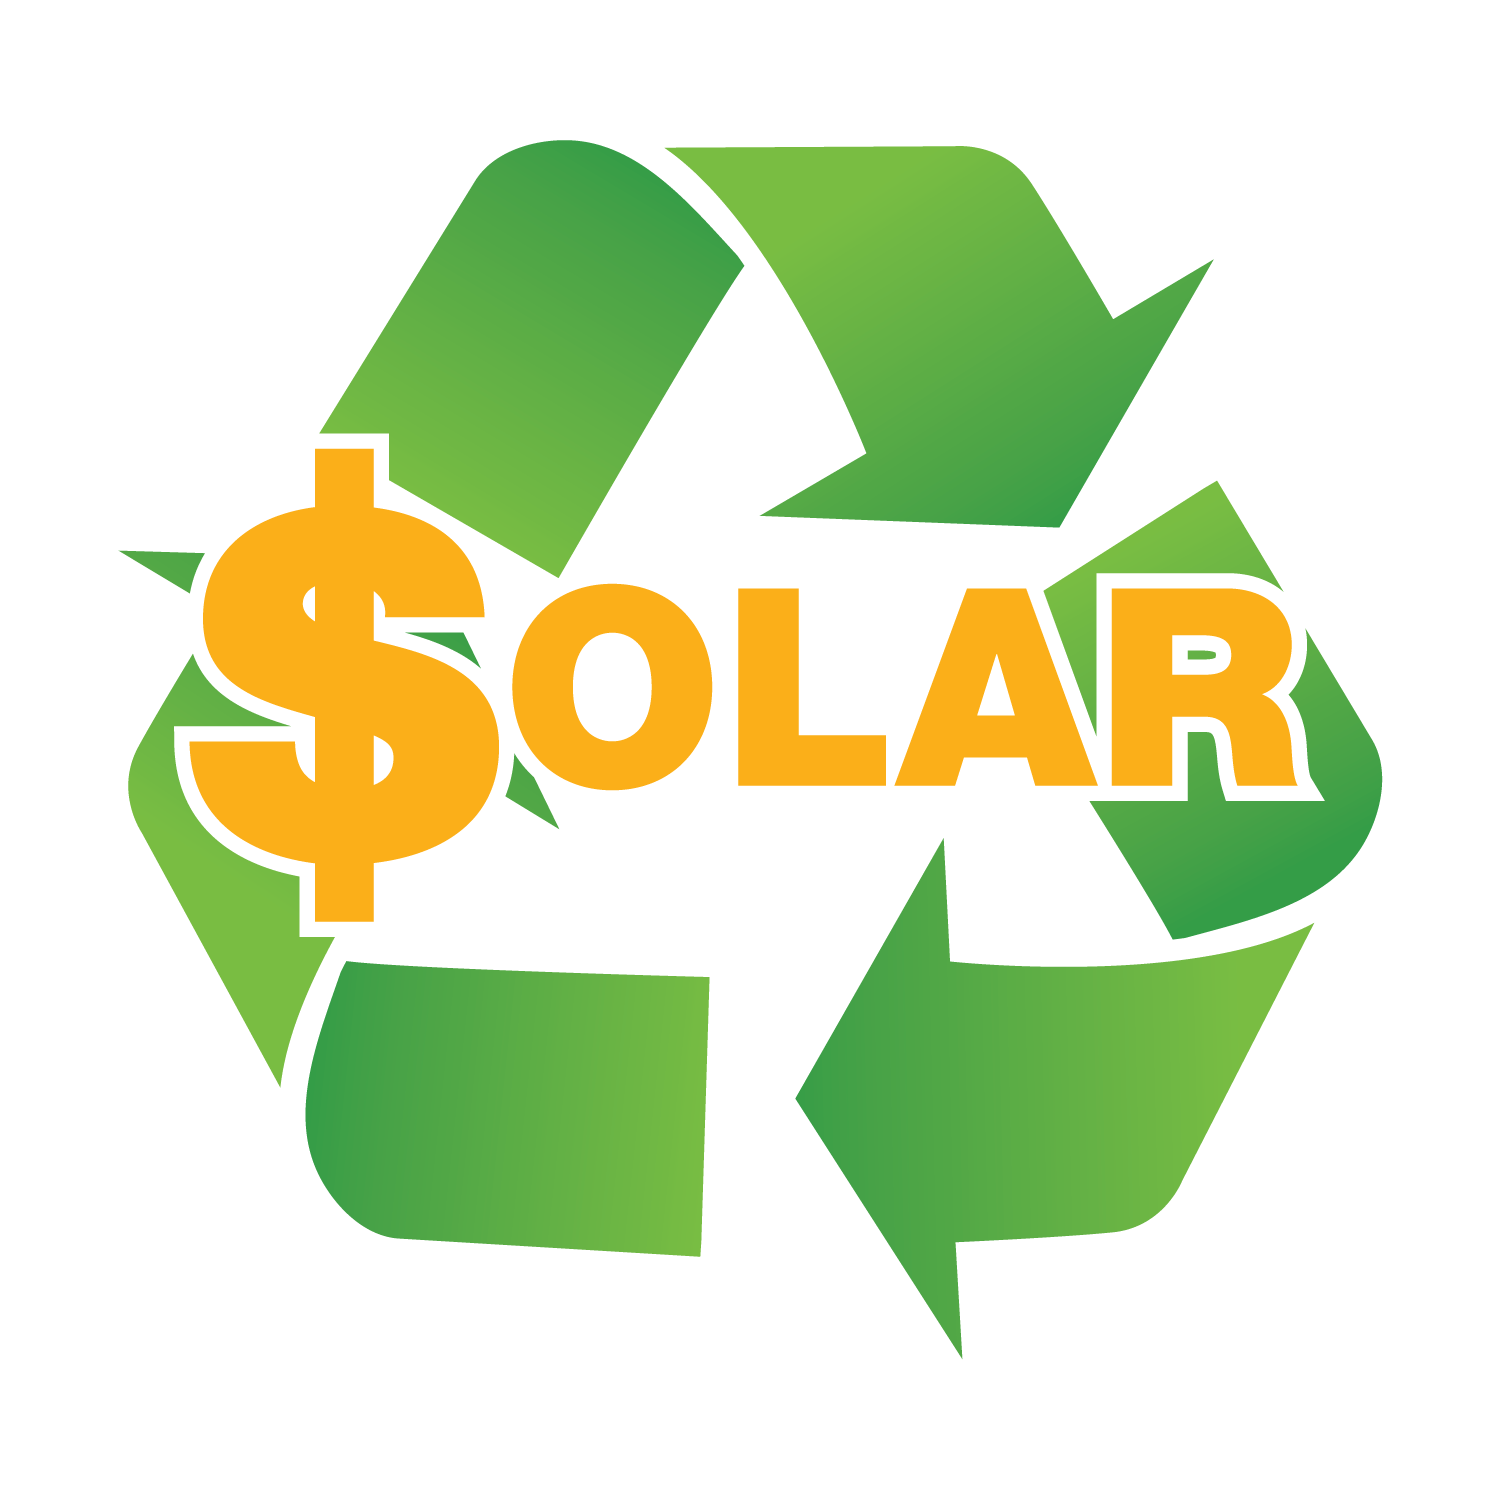 kindredSun™ solar dolars